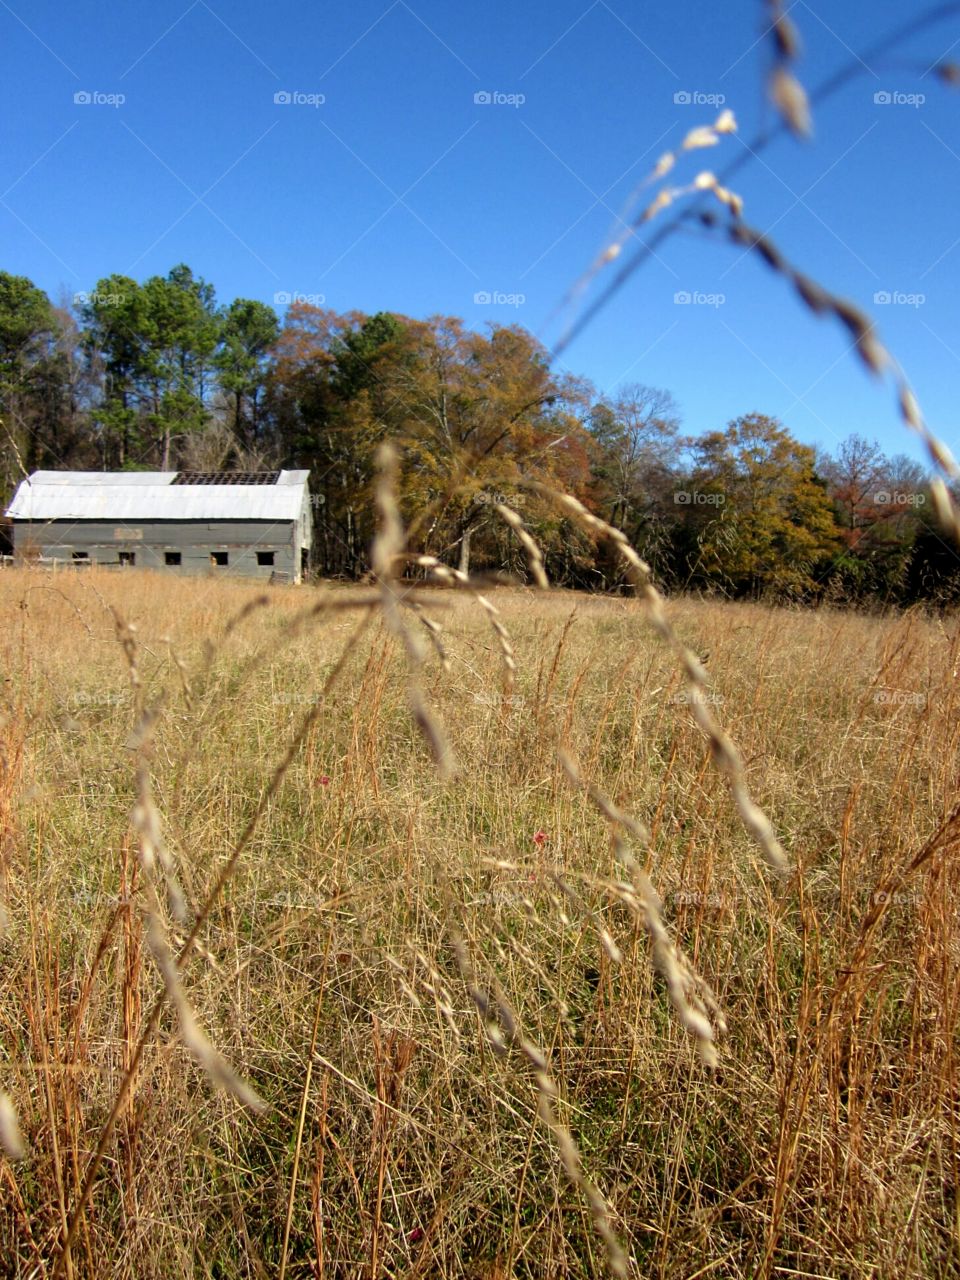 old farmhouse in a field